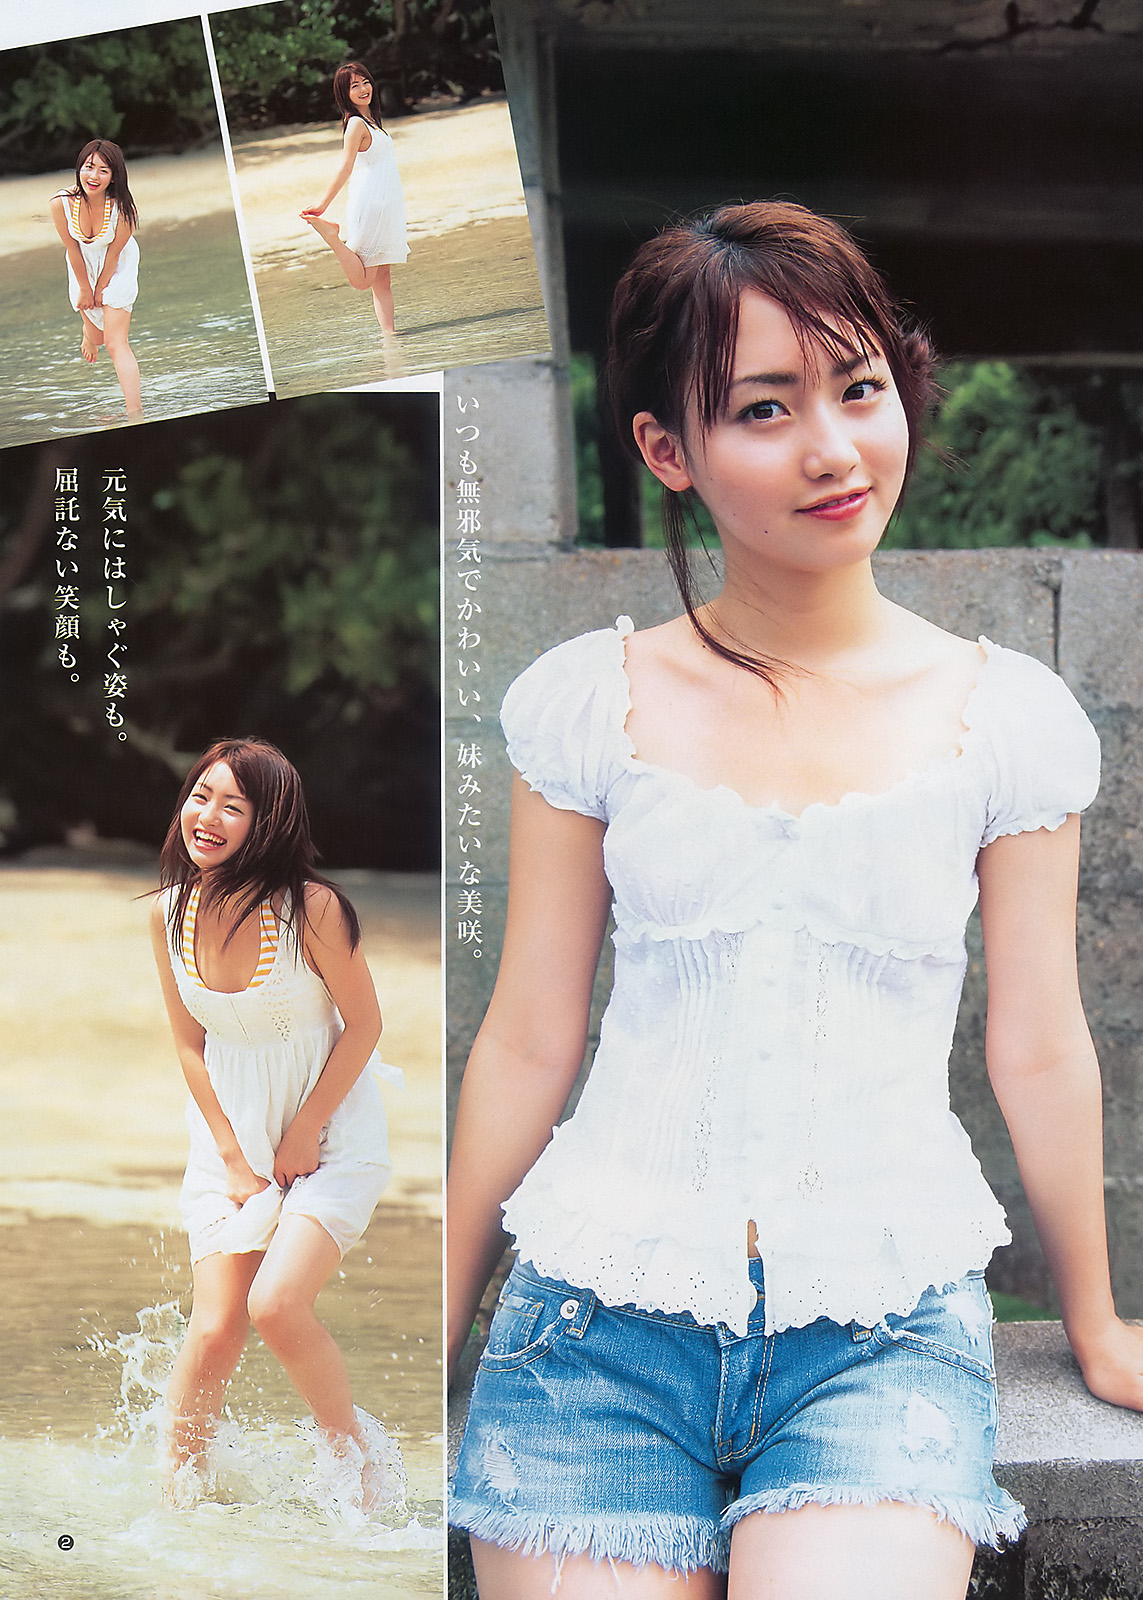 Misaki Momose - Cute Japanese Girl And Hot Girl Asia - Cute Japanese ...